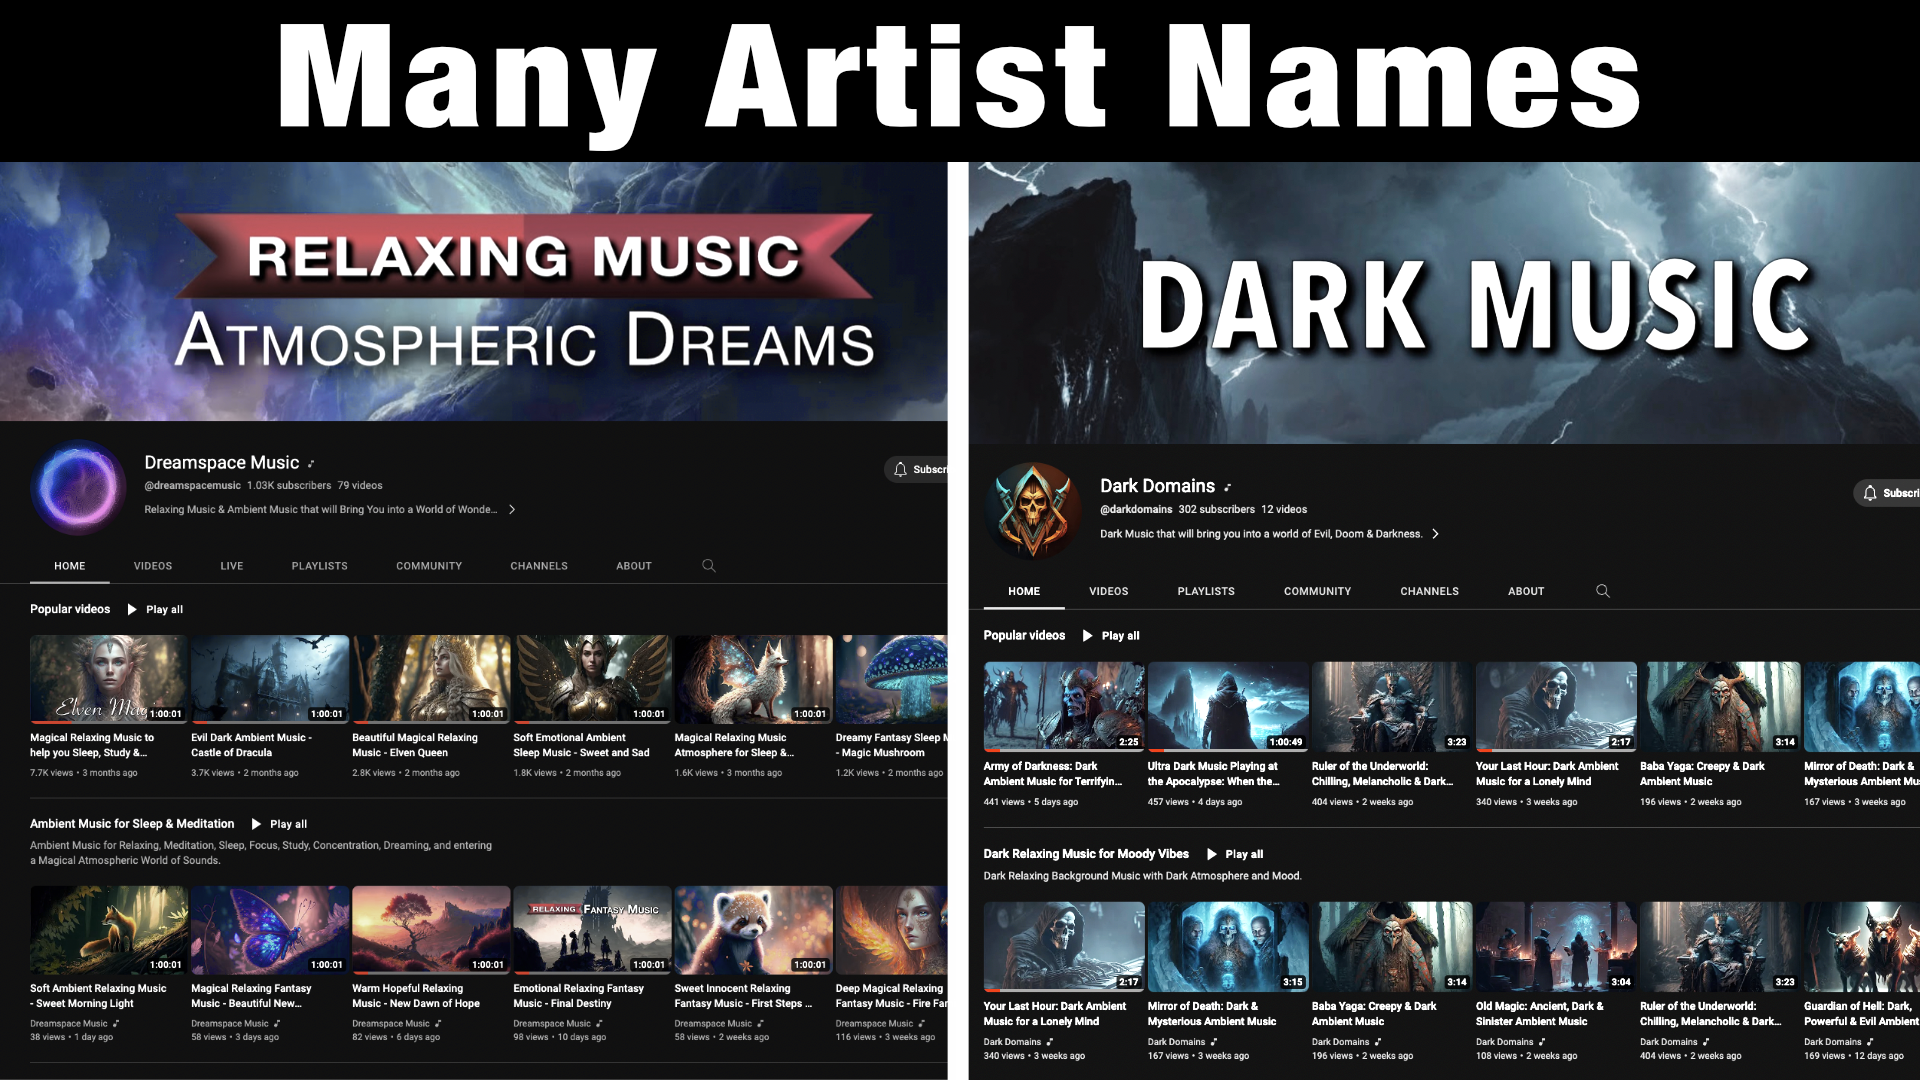 Many Artist Names